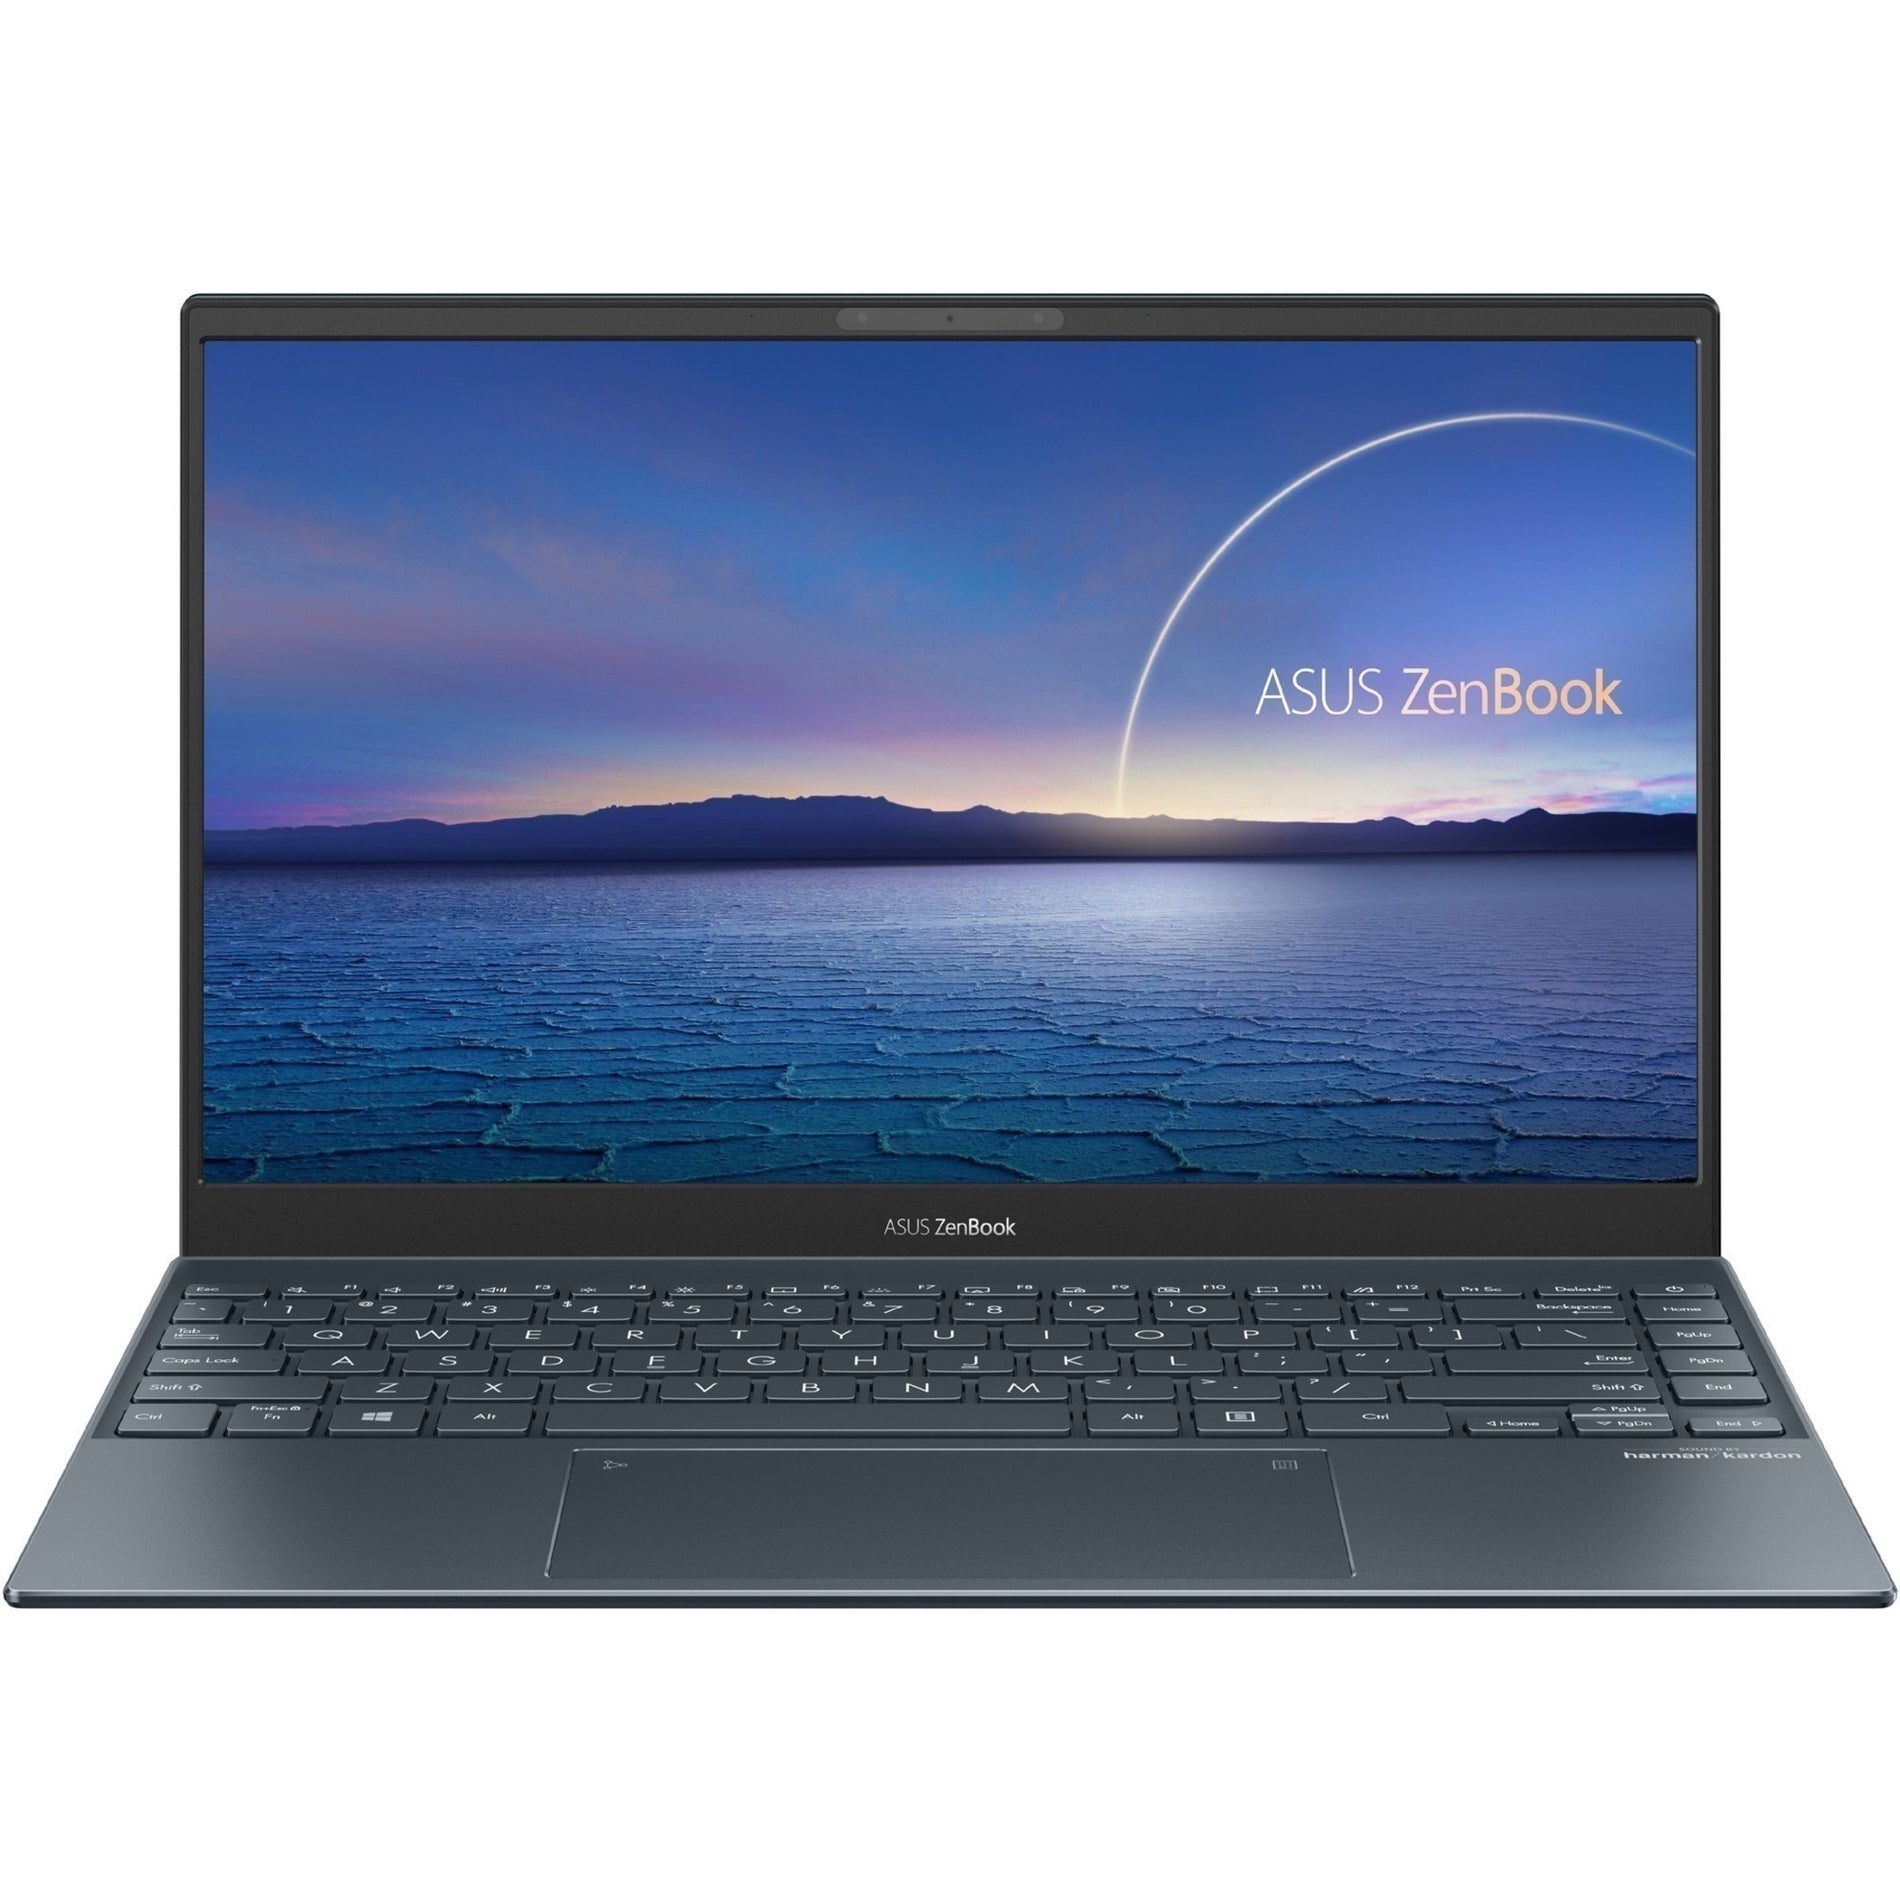 Asus UX325EA-DH51 ZenBook 13 Notebook, 13.3" Full HD, Intel Core i5, 8GB RAM, 256GB SSD, Pine Gray